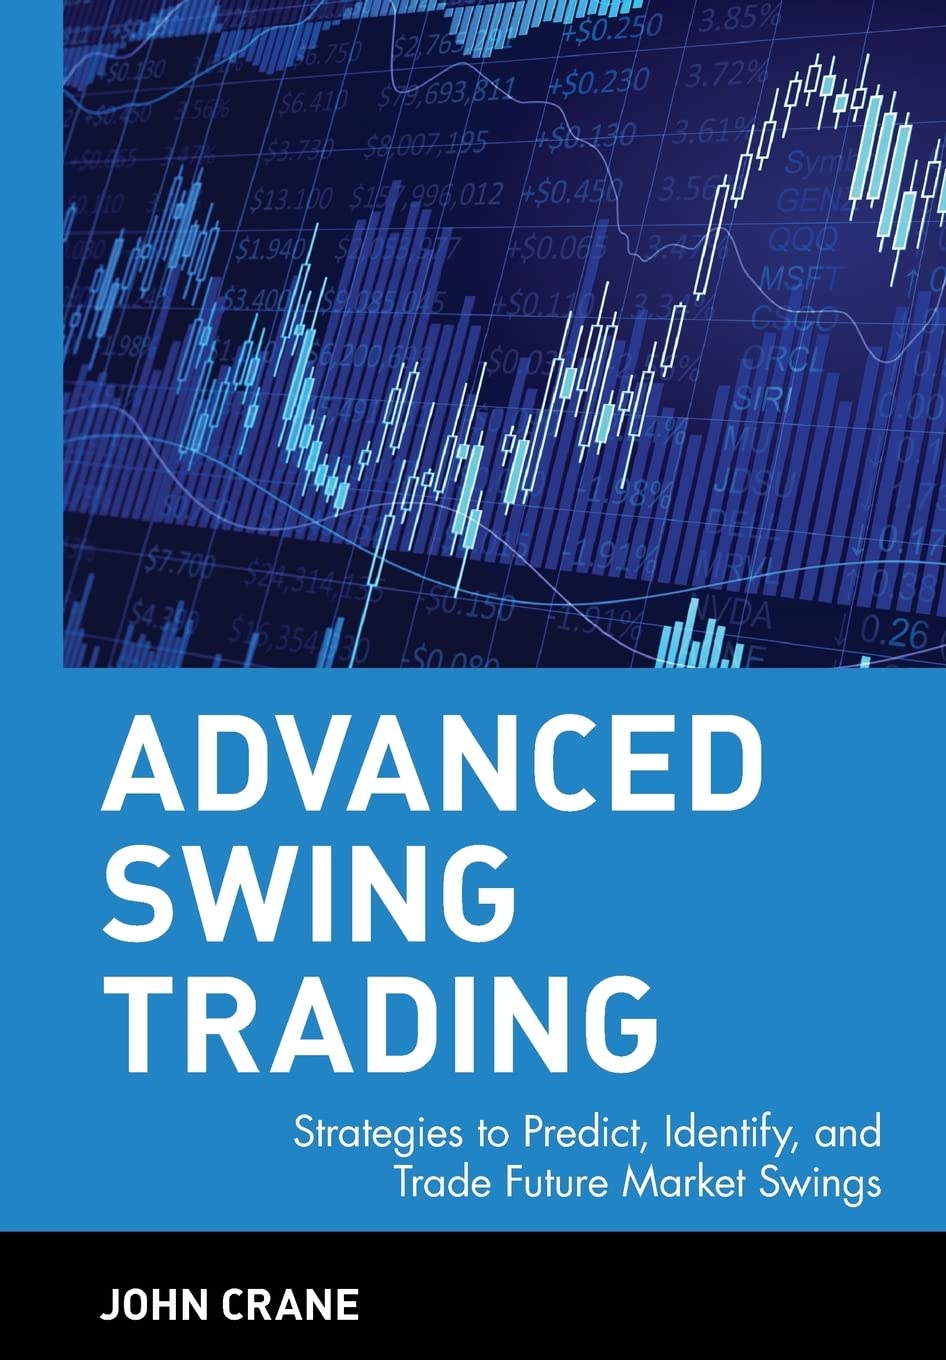 Advance Swing Trading by John Crane